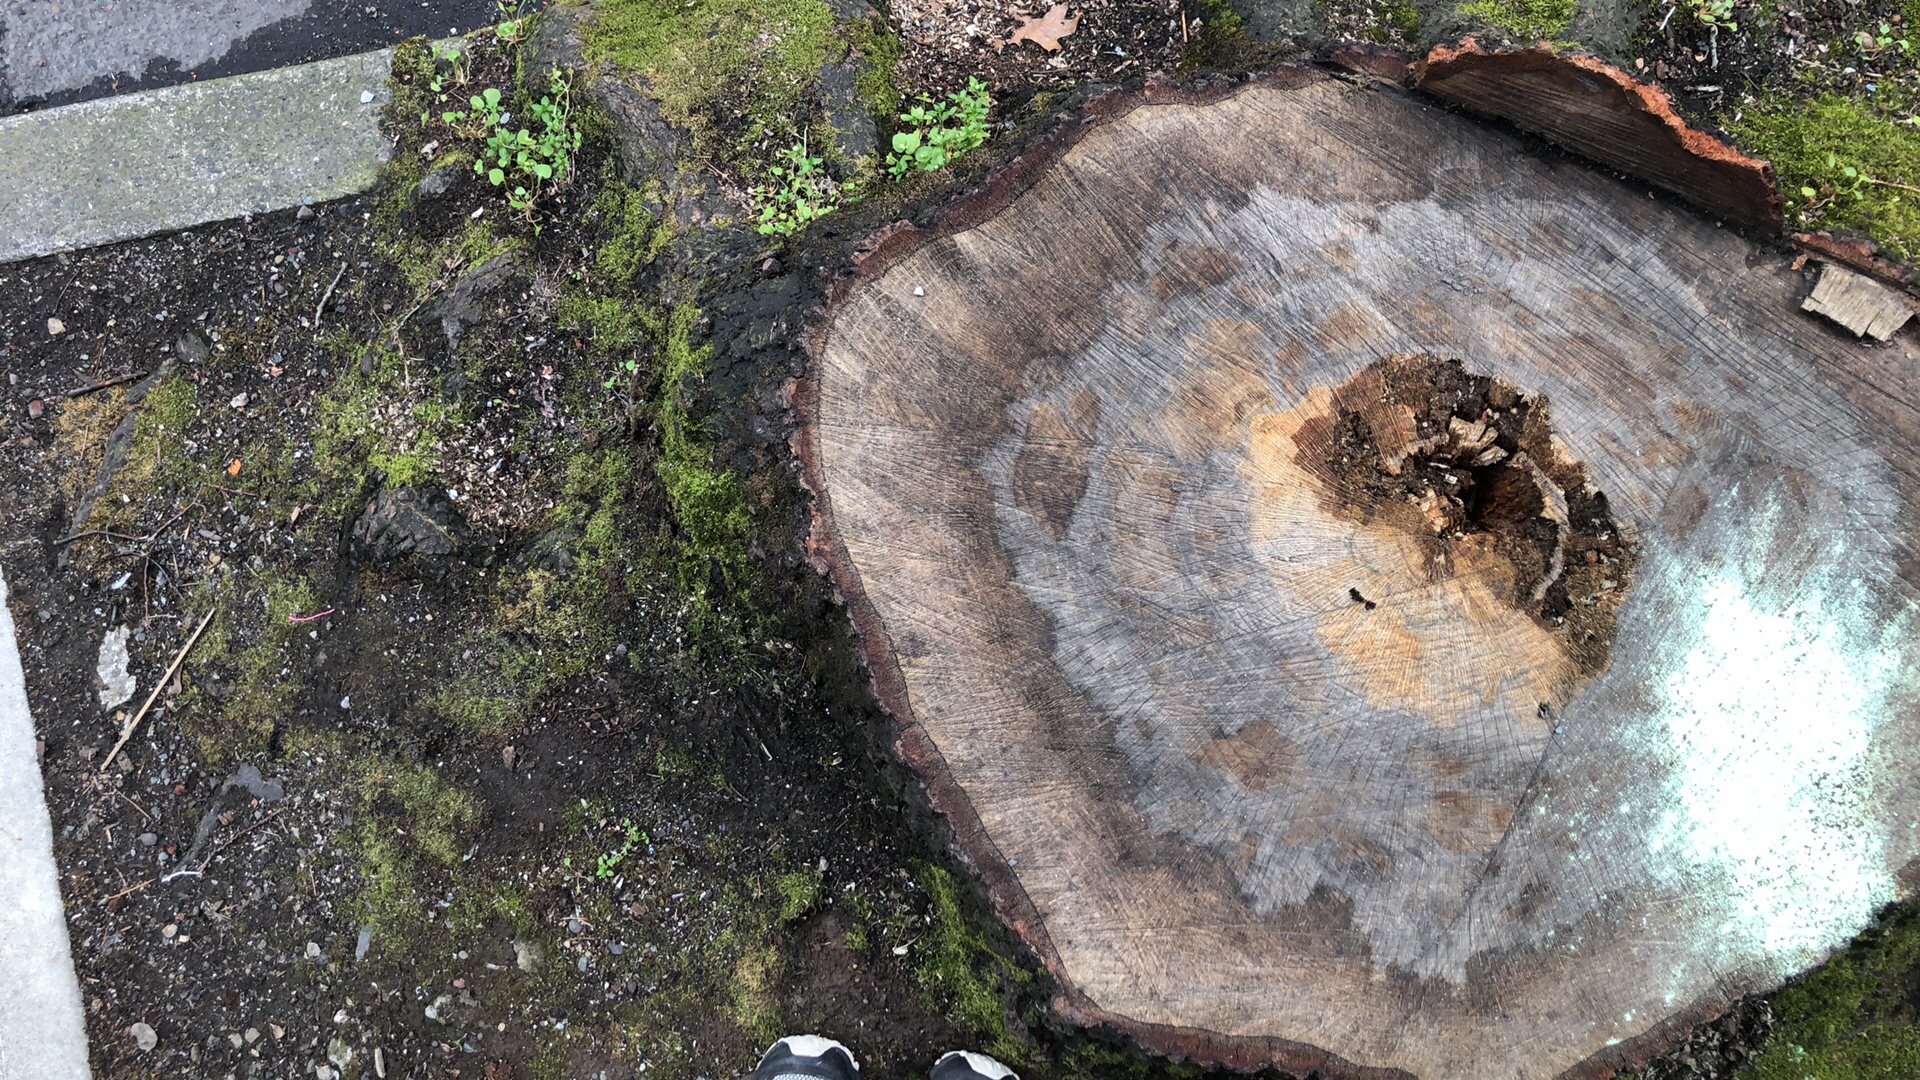 Tree stump